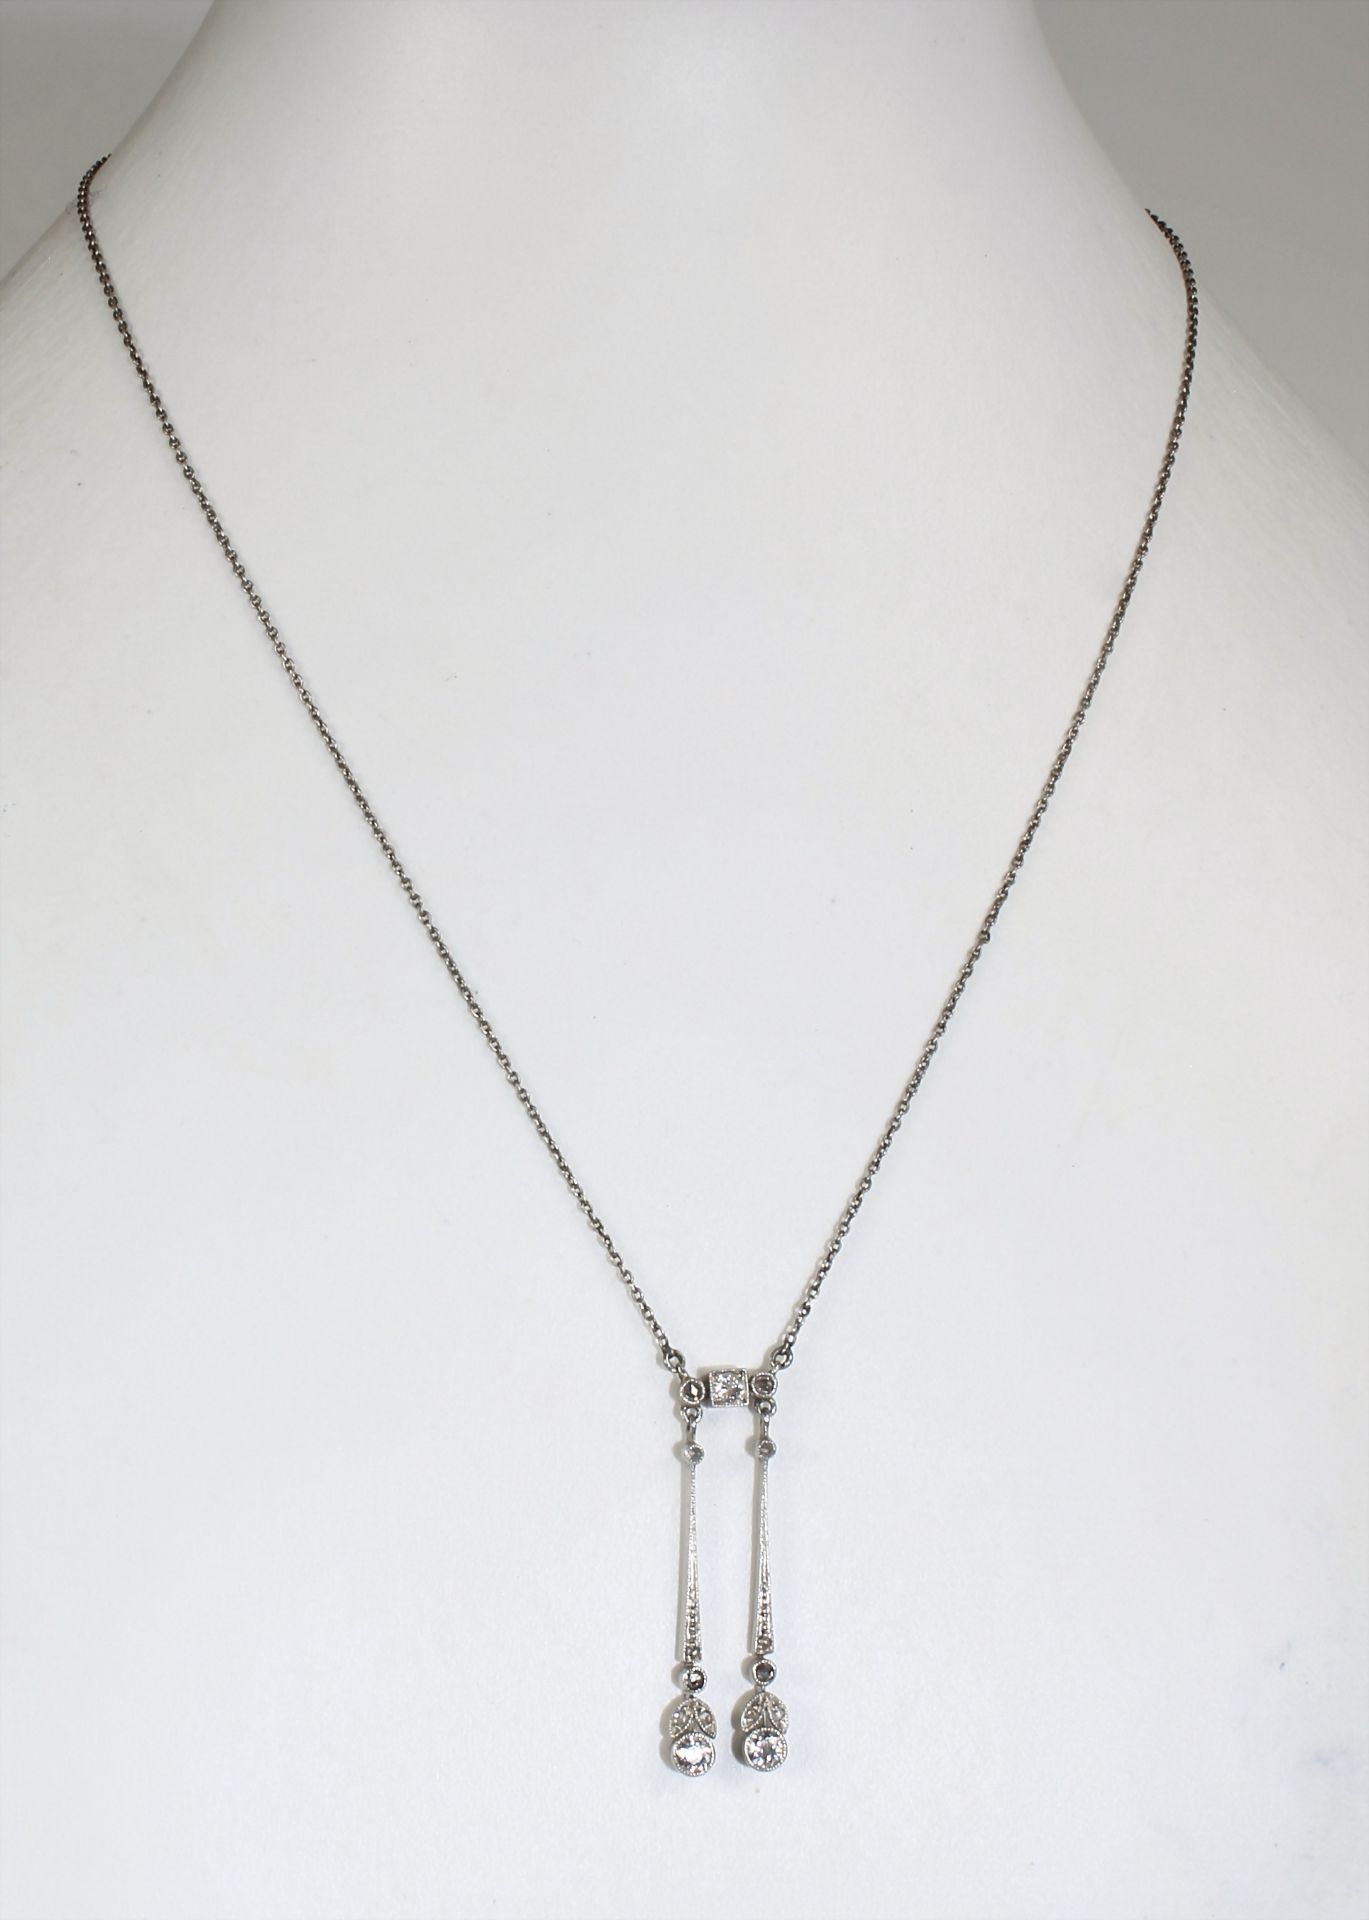 necklace around 1910/20, platinum, 2 hanging rods, 3 old cut-diamonds c. 0.36 ct white, 12 ... - Image 2 of 2